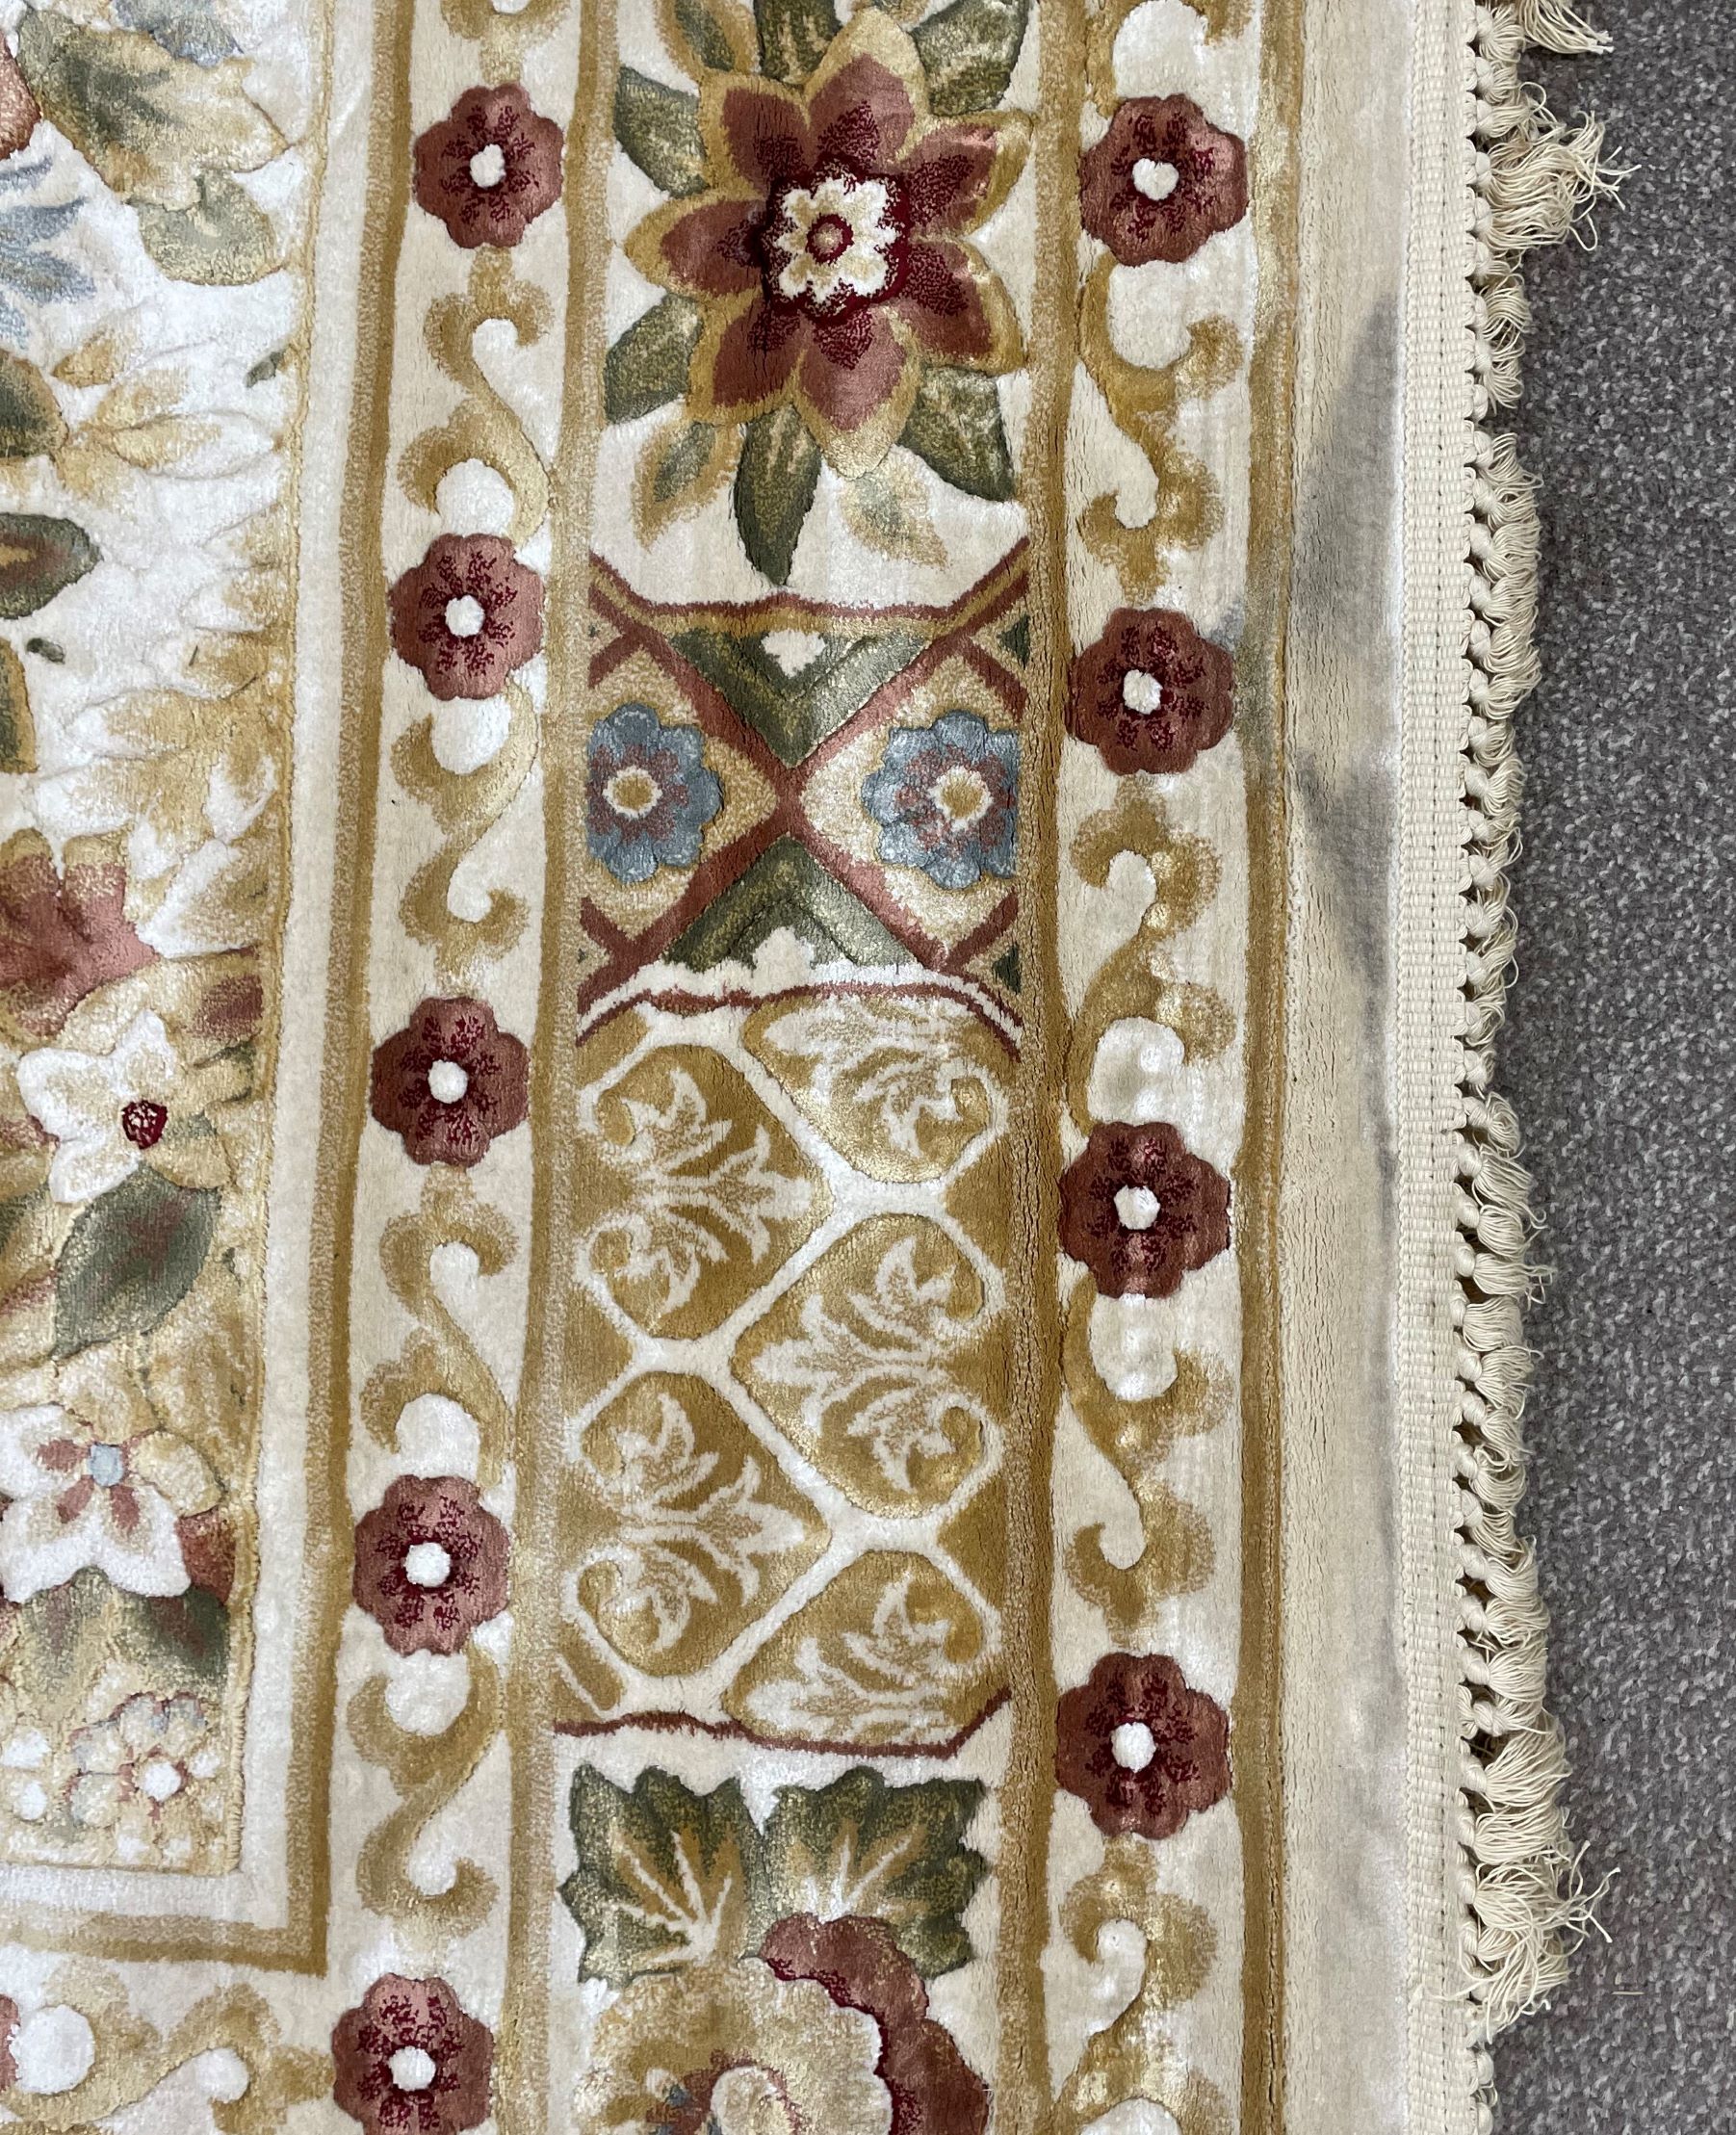 Gold & cream ground full pile Oriental carpet 350cm by 240cm - Image 2 of 8